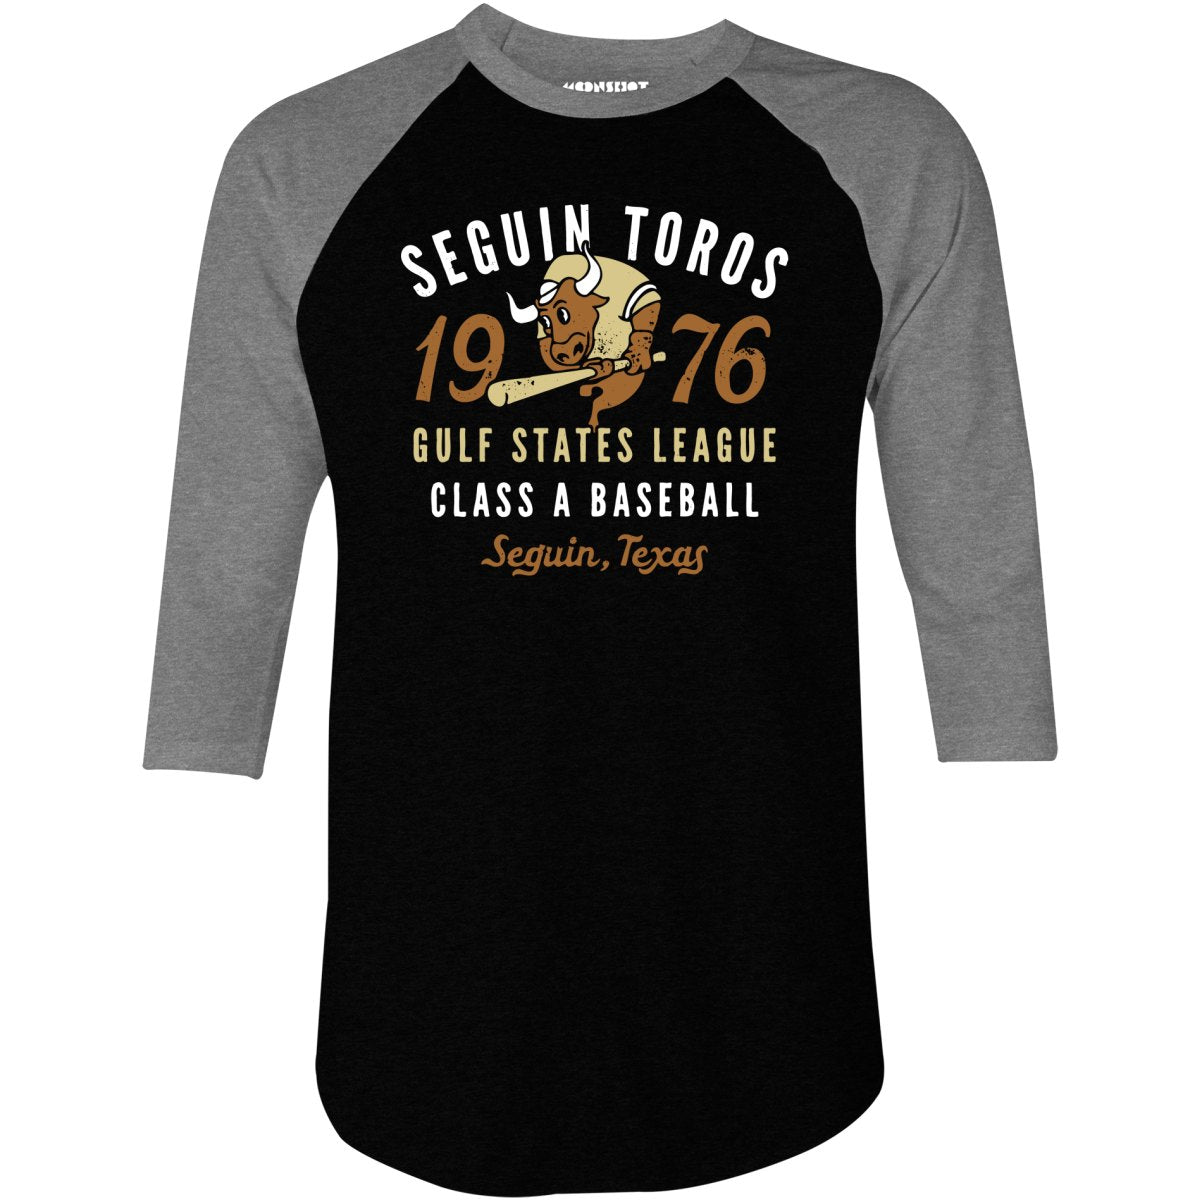 Seguin Toros - Texas - Vintage Defunct Baseball Teams - 3/4 Sleeve Raglan T-Shirt